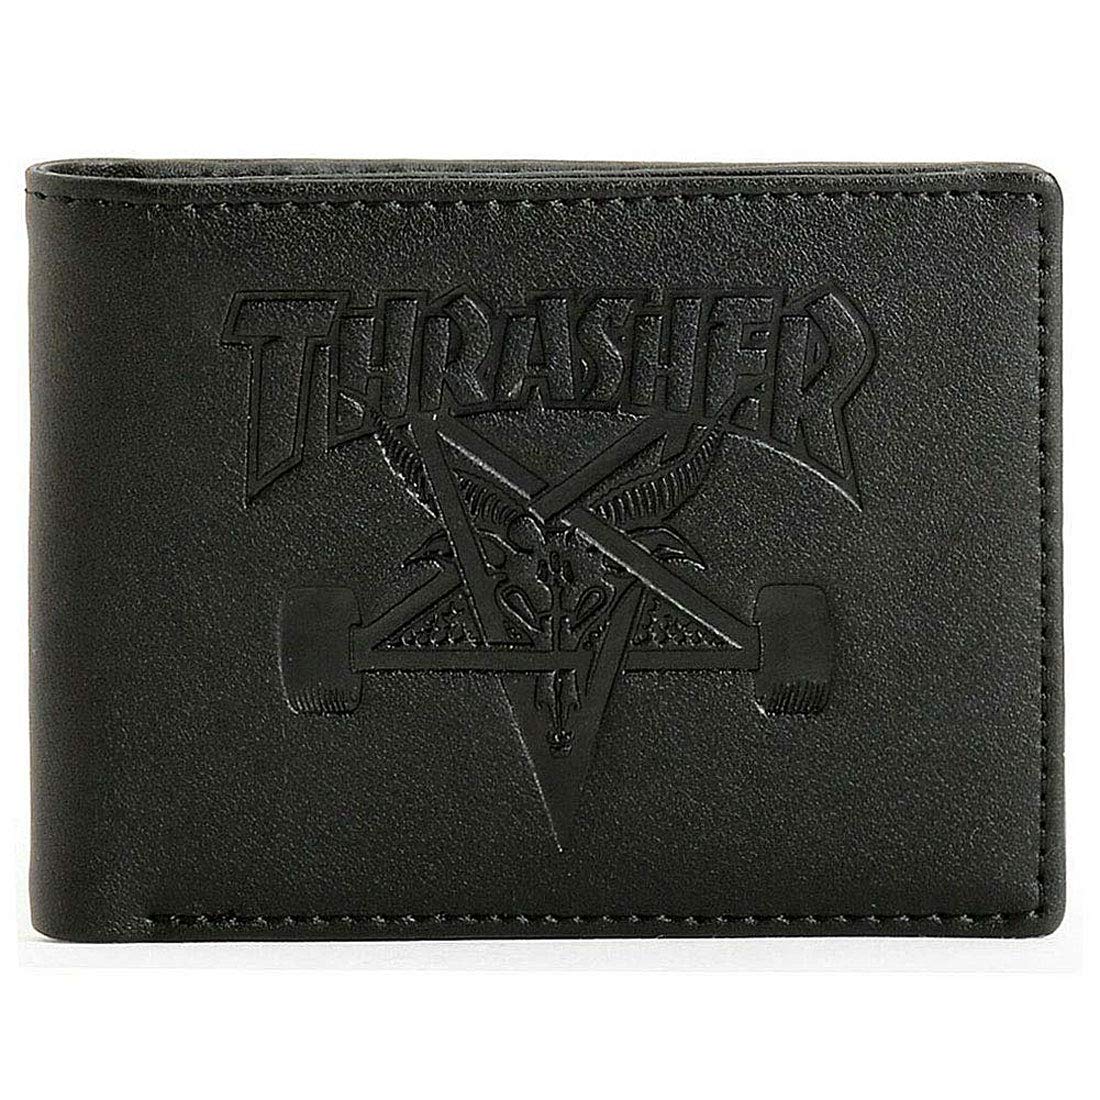 Thrasher Skate Goat Leather Wallet - Black